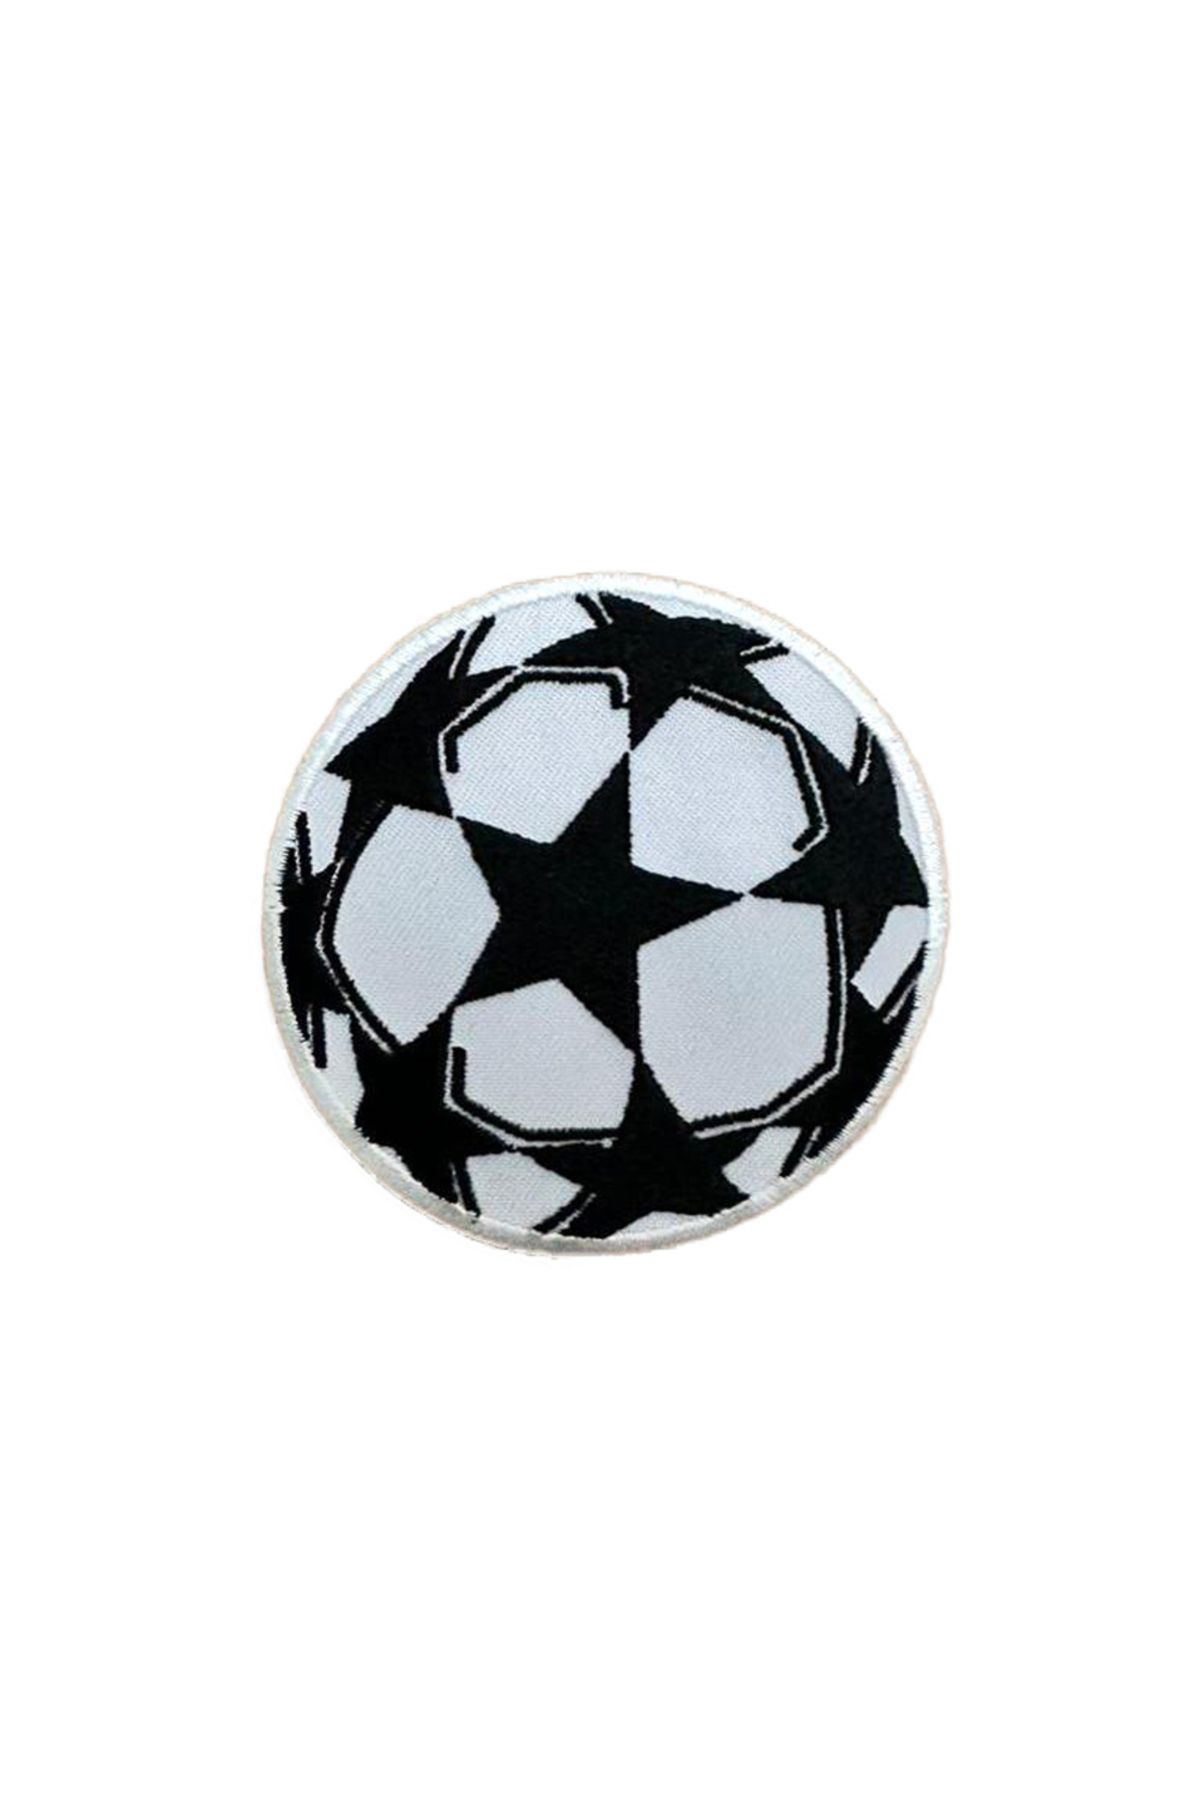 X-SHOP Futbol Topu Football Ball Patches Arma Peç Kot Yaması